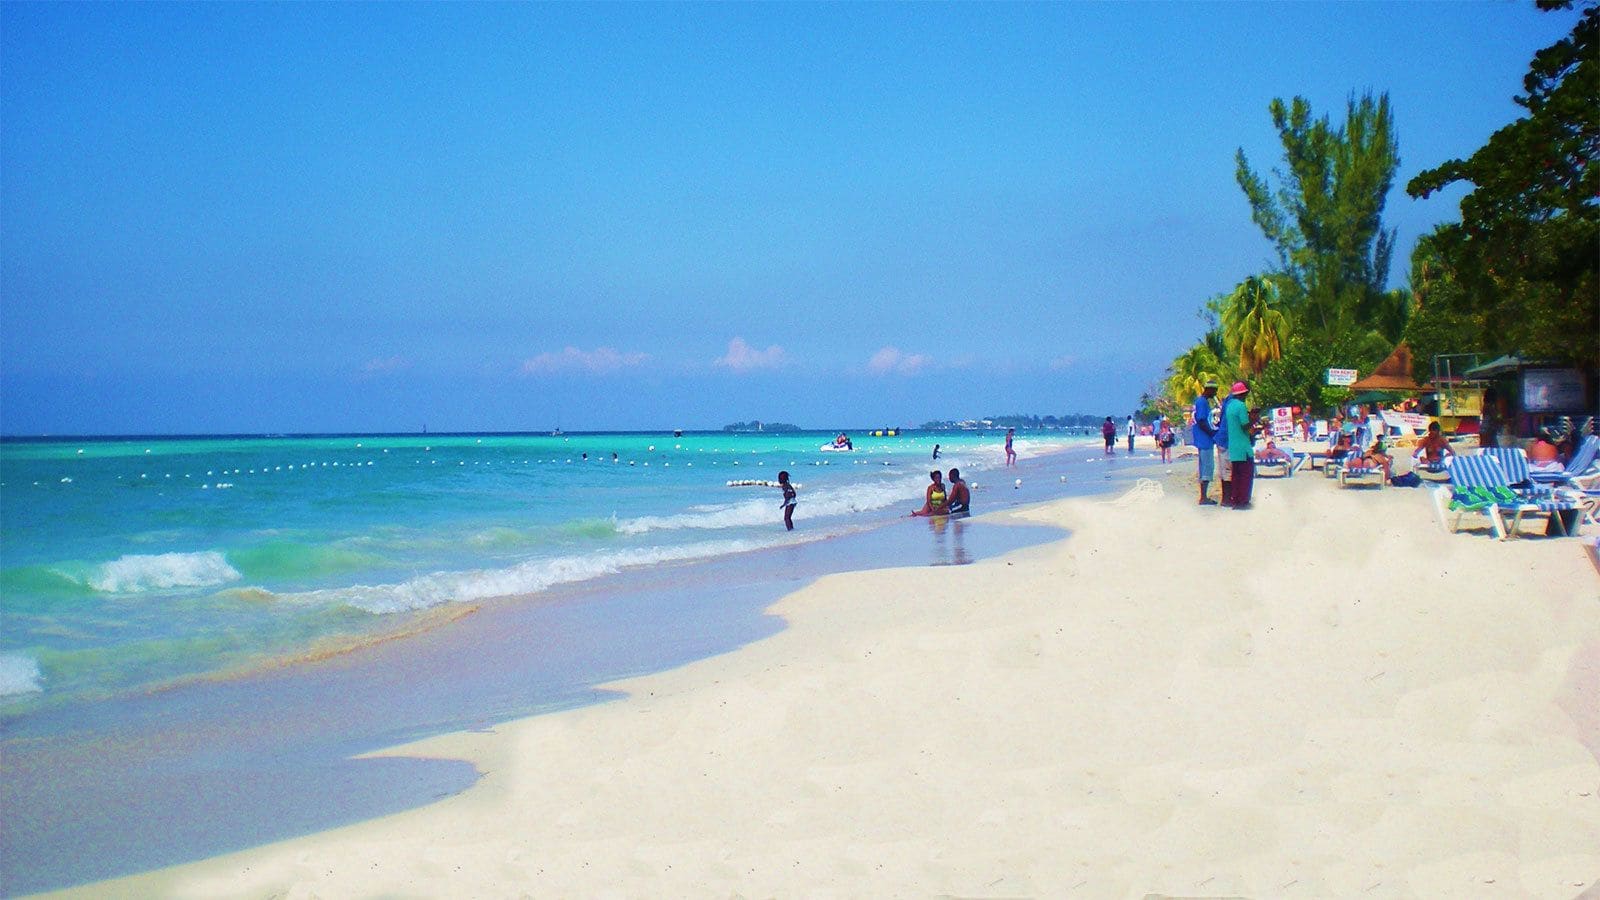 Coco La Palm Seaside Resort